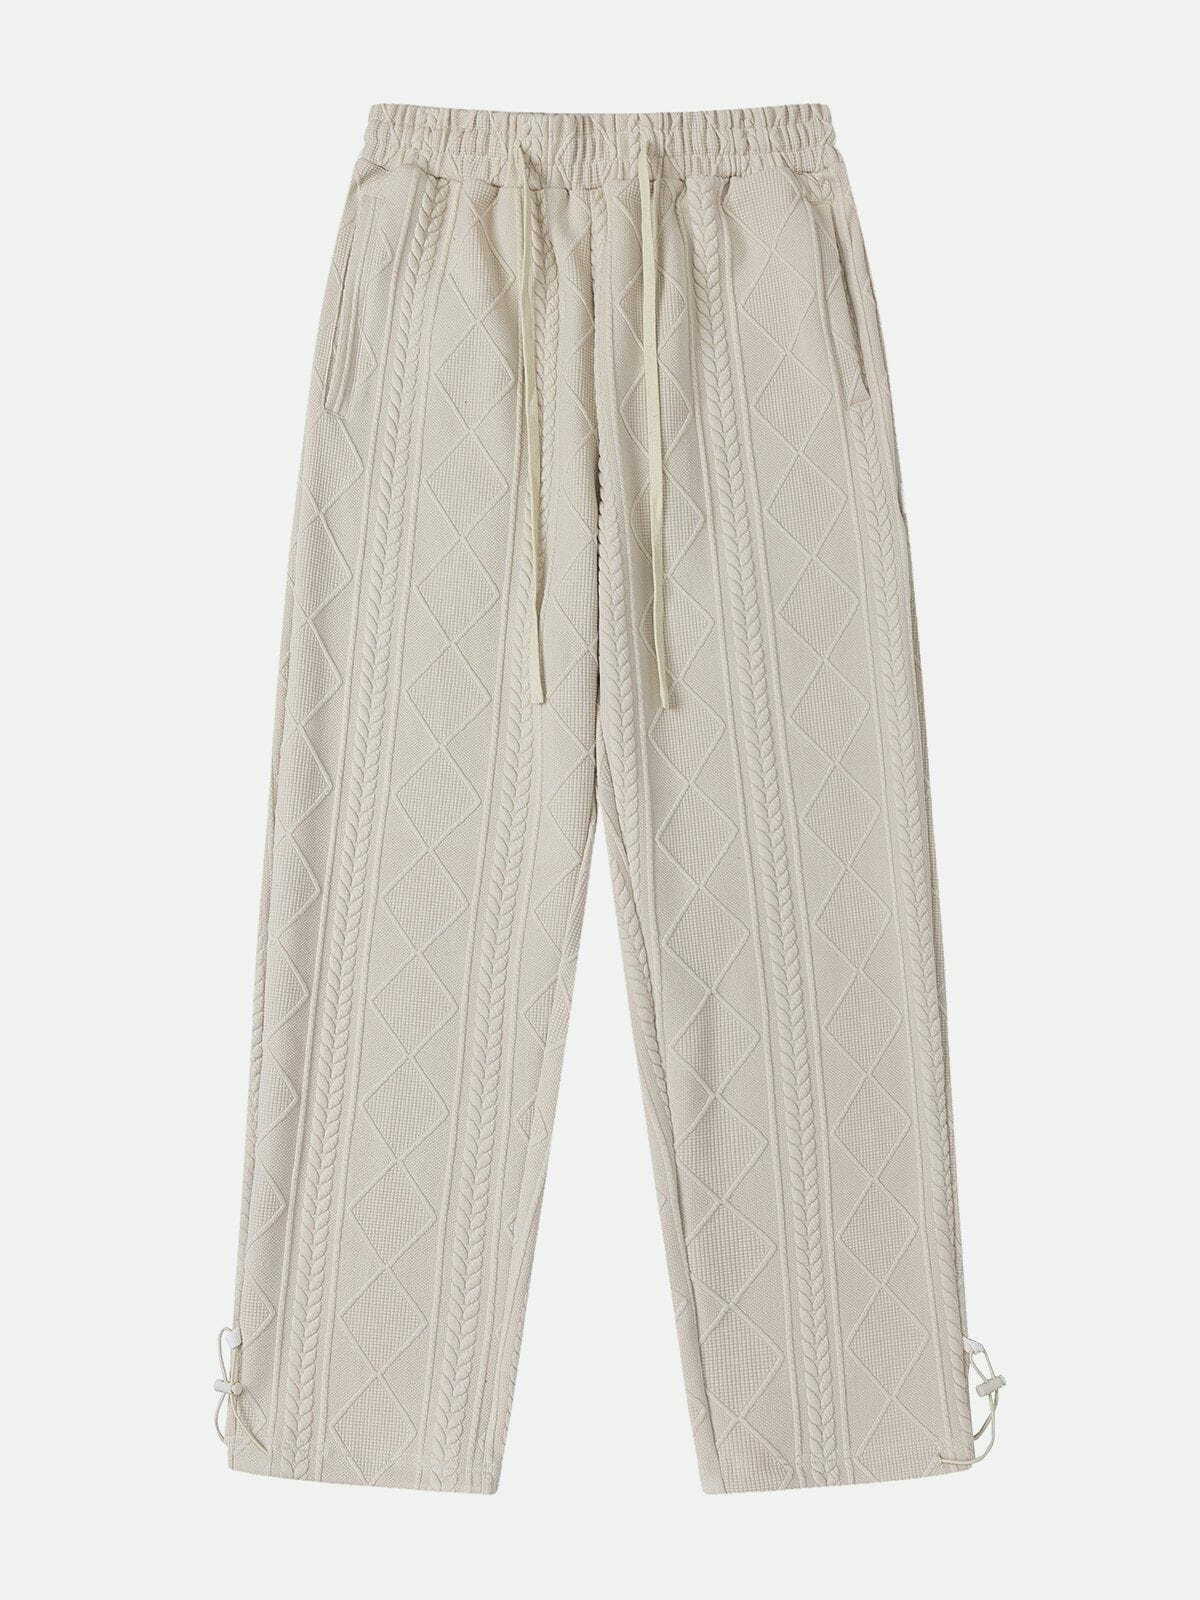 minimalist drawstring pants sleek & versatile streetwear 5648